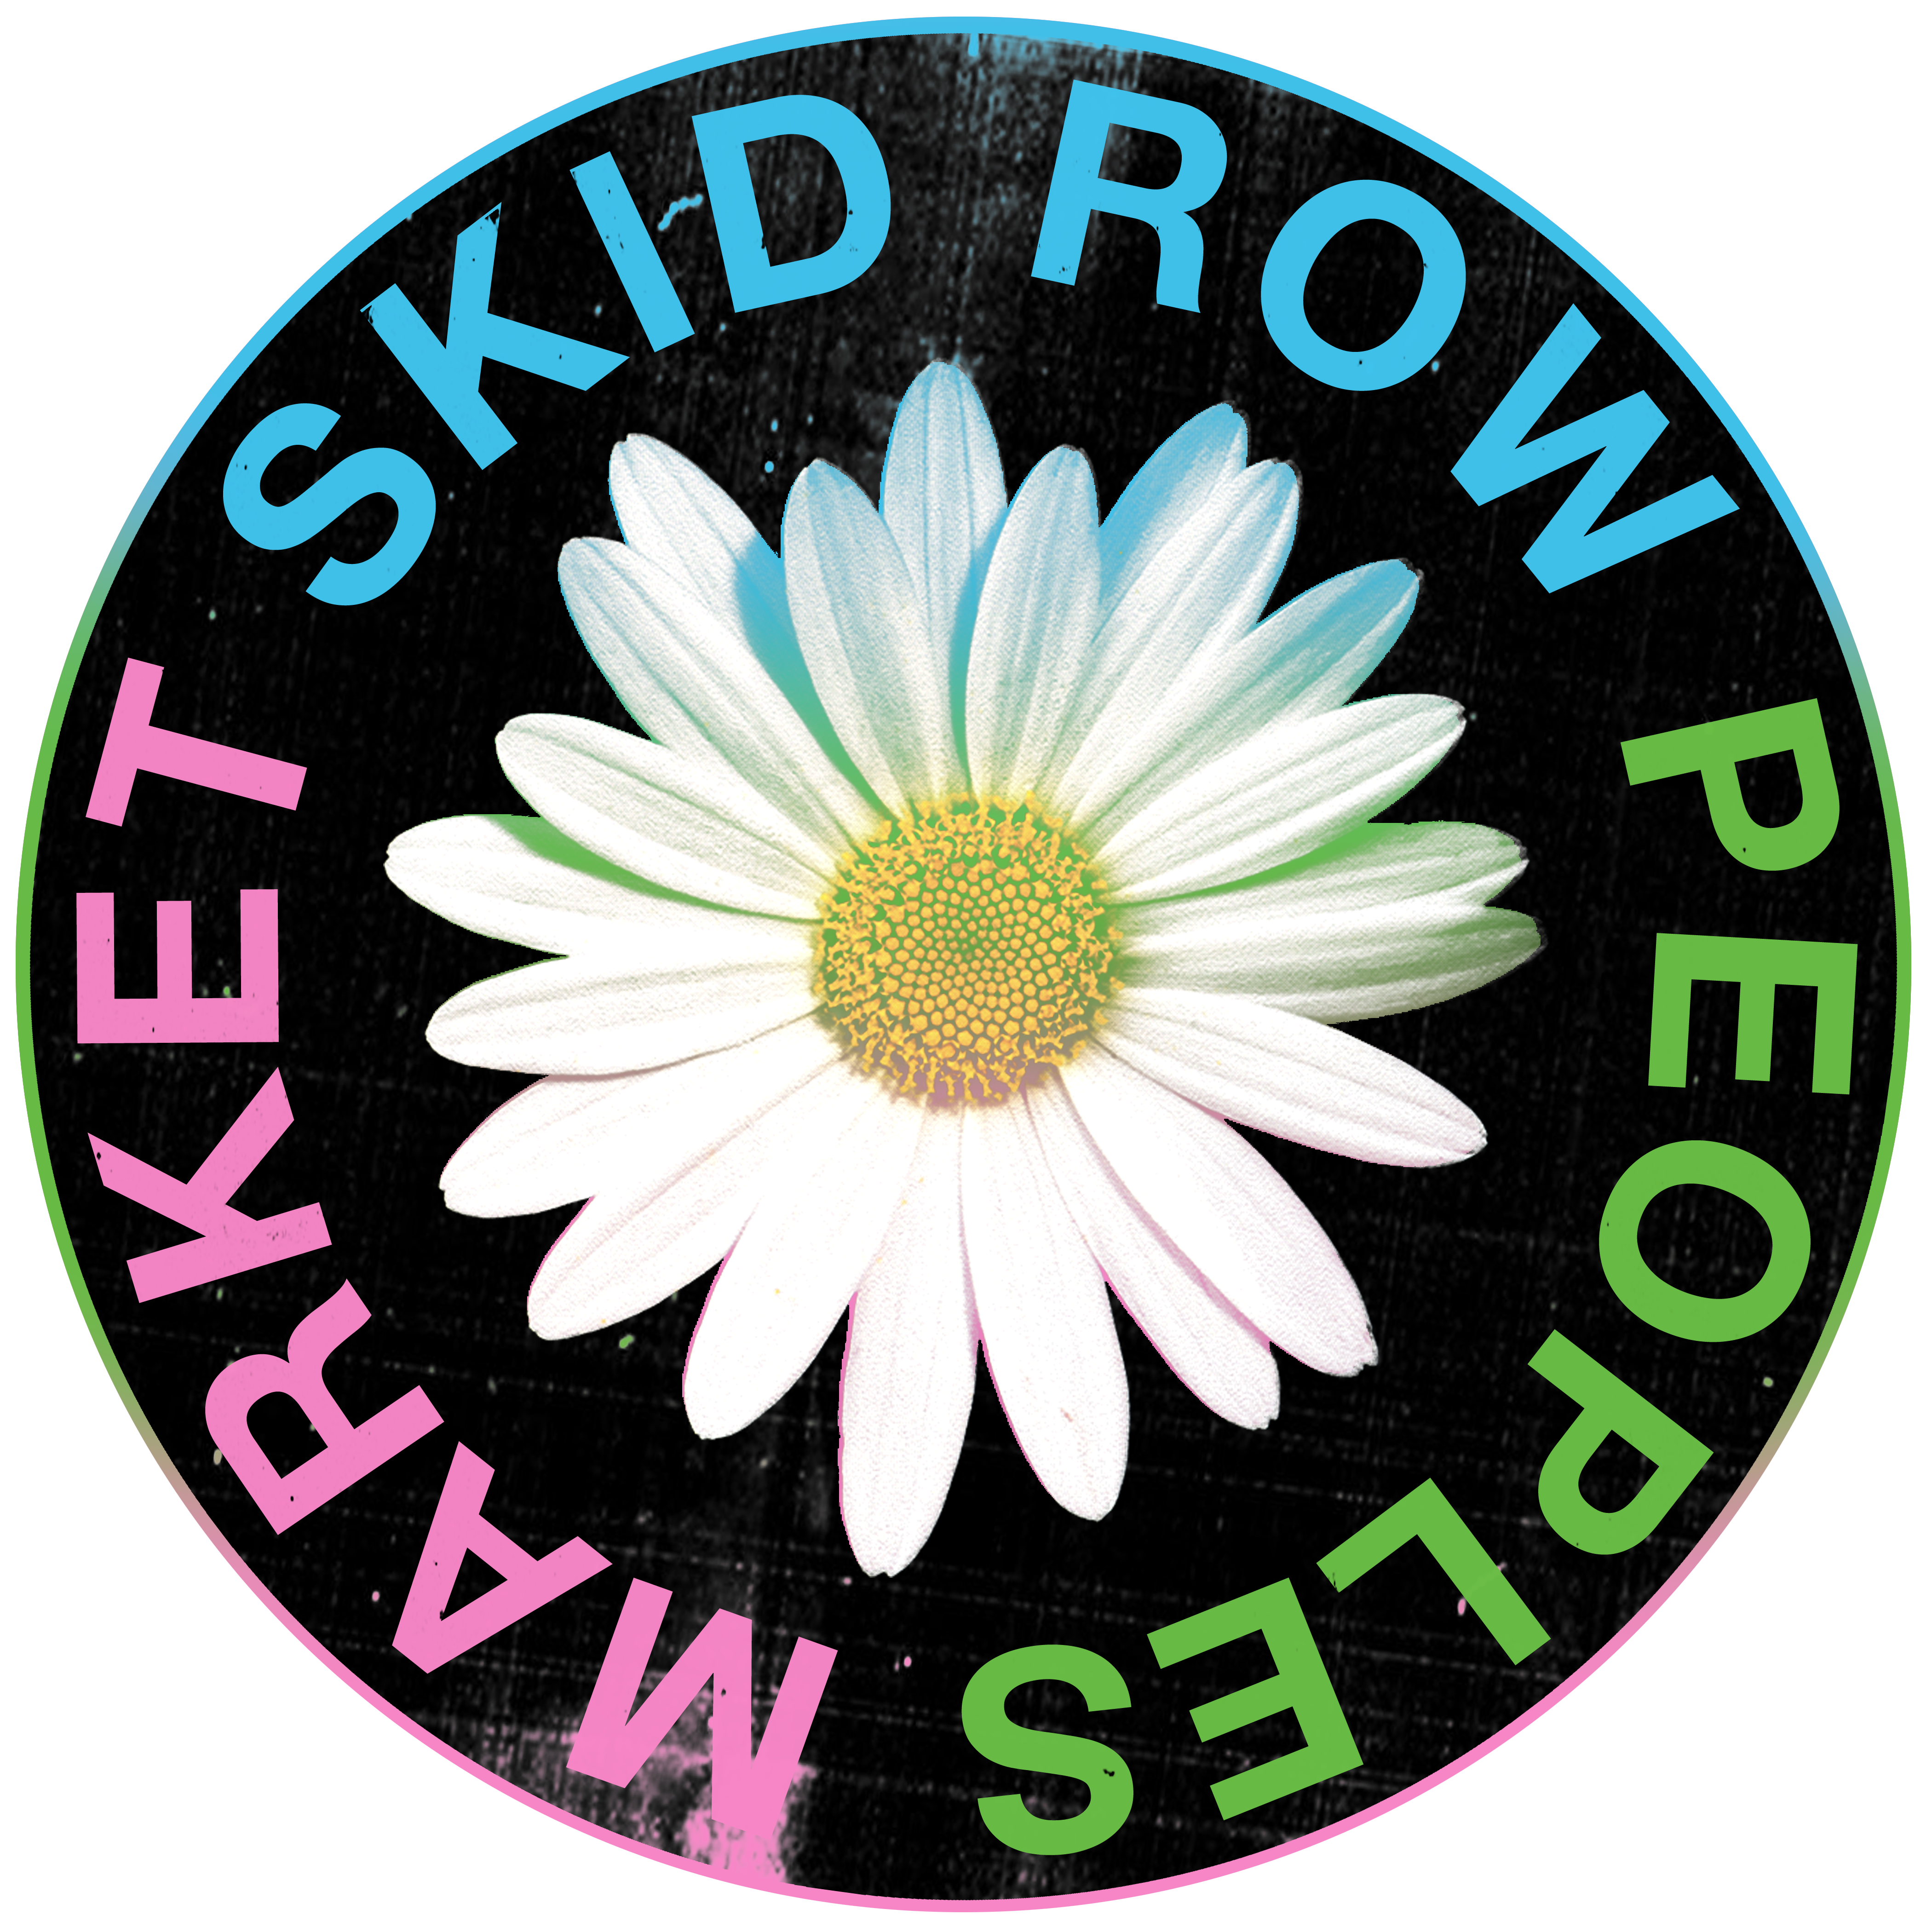 Skid Row Peoples Market